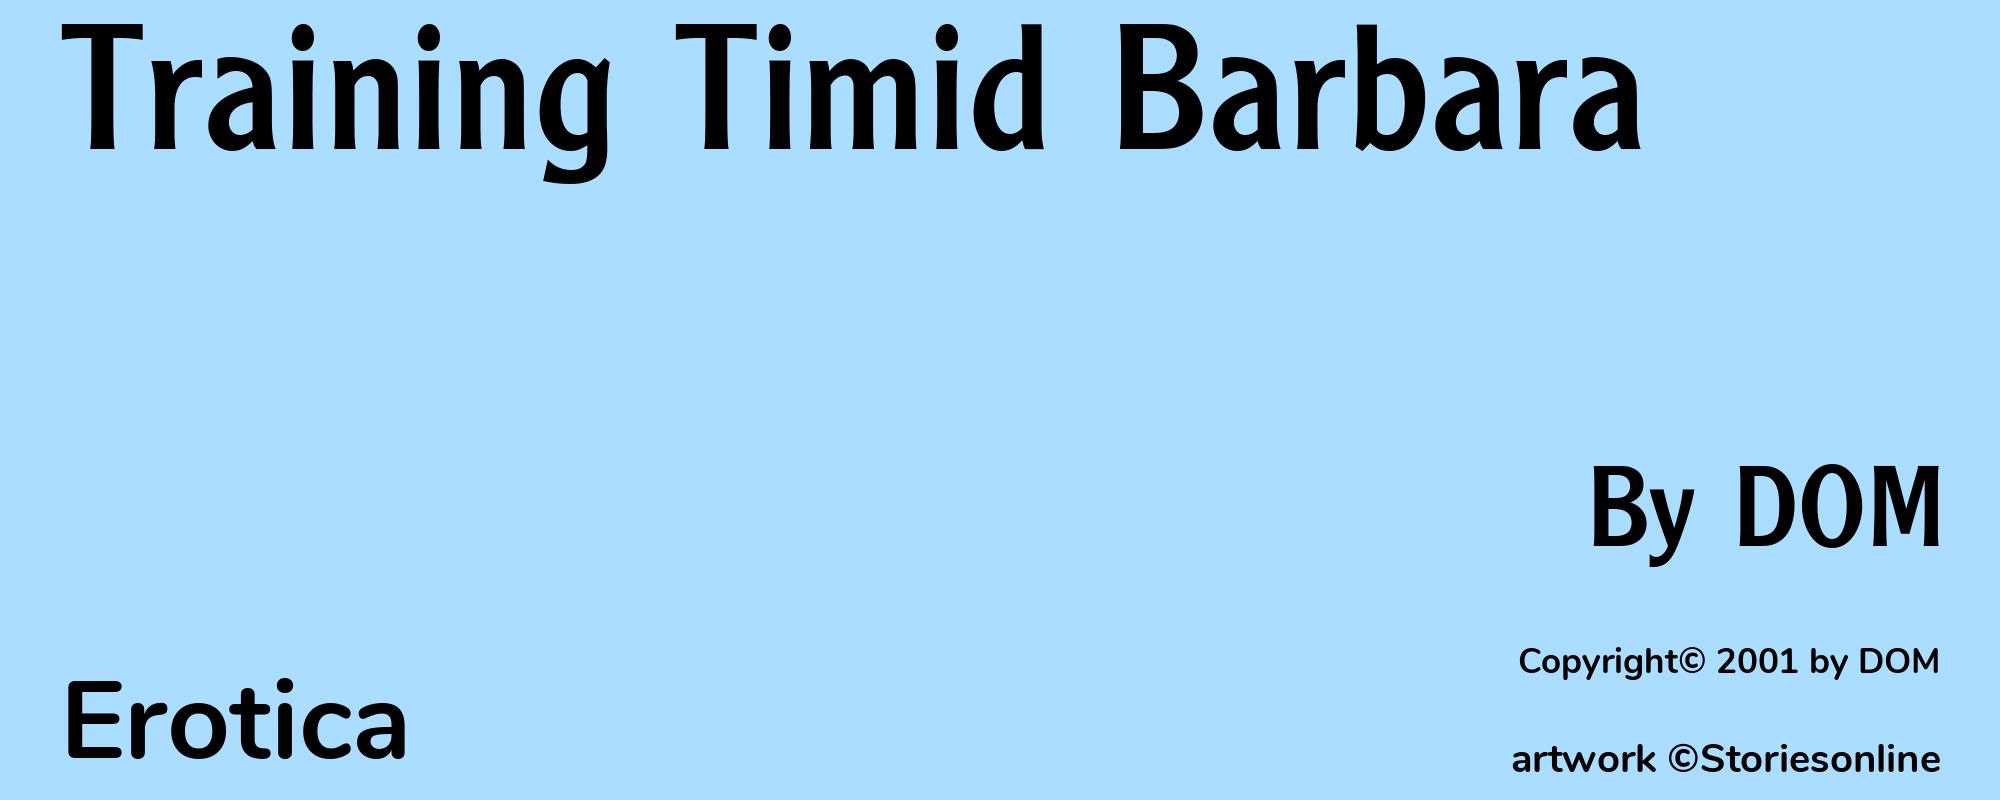 Training Timid Barbara - Cover